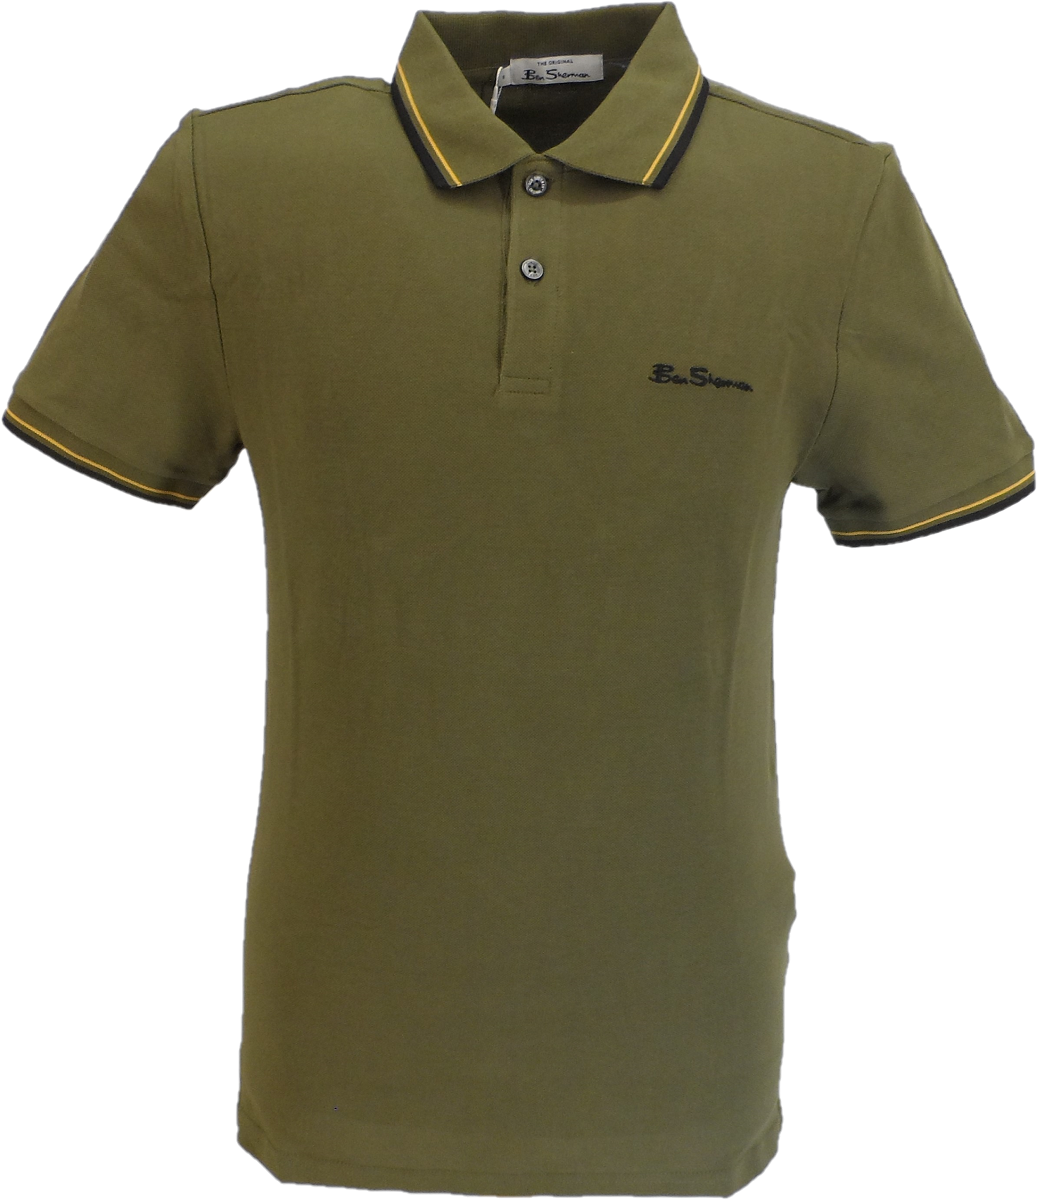 Ben Sherman Men's Signature Camouflage Green 100% Cotton Polo Shirt